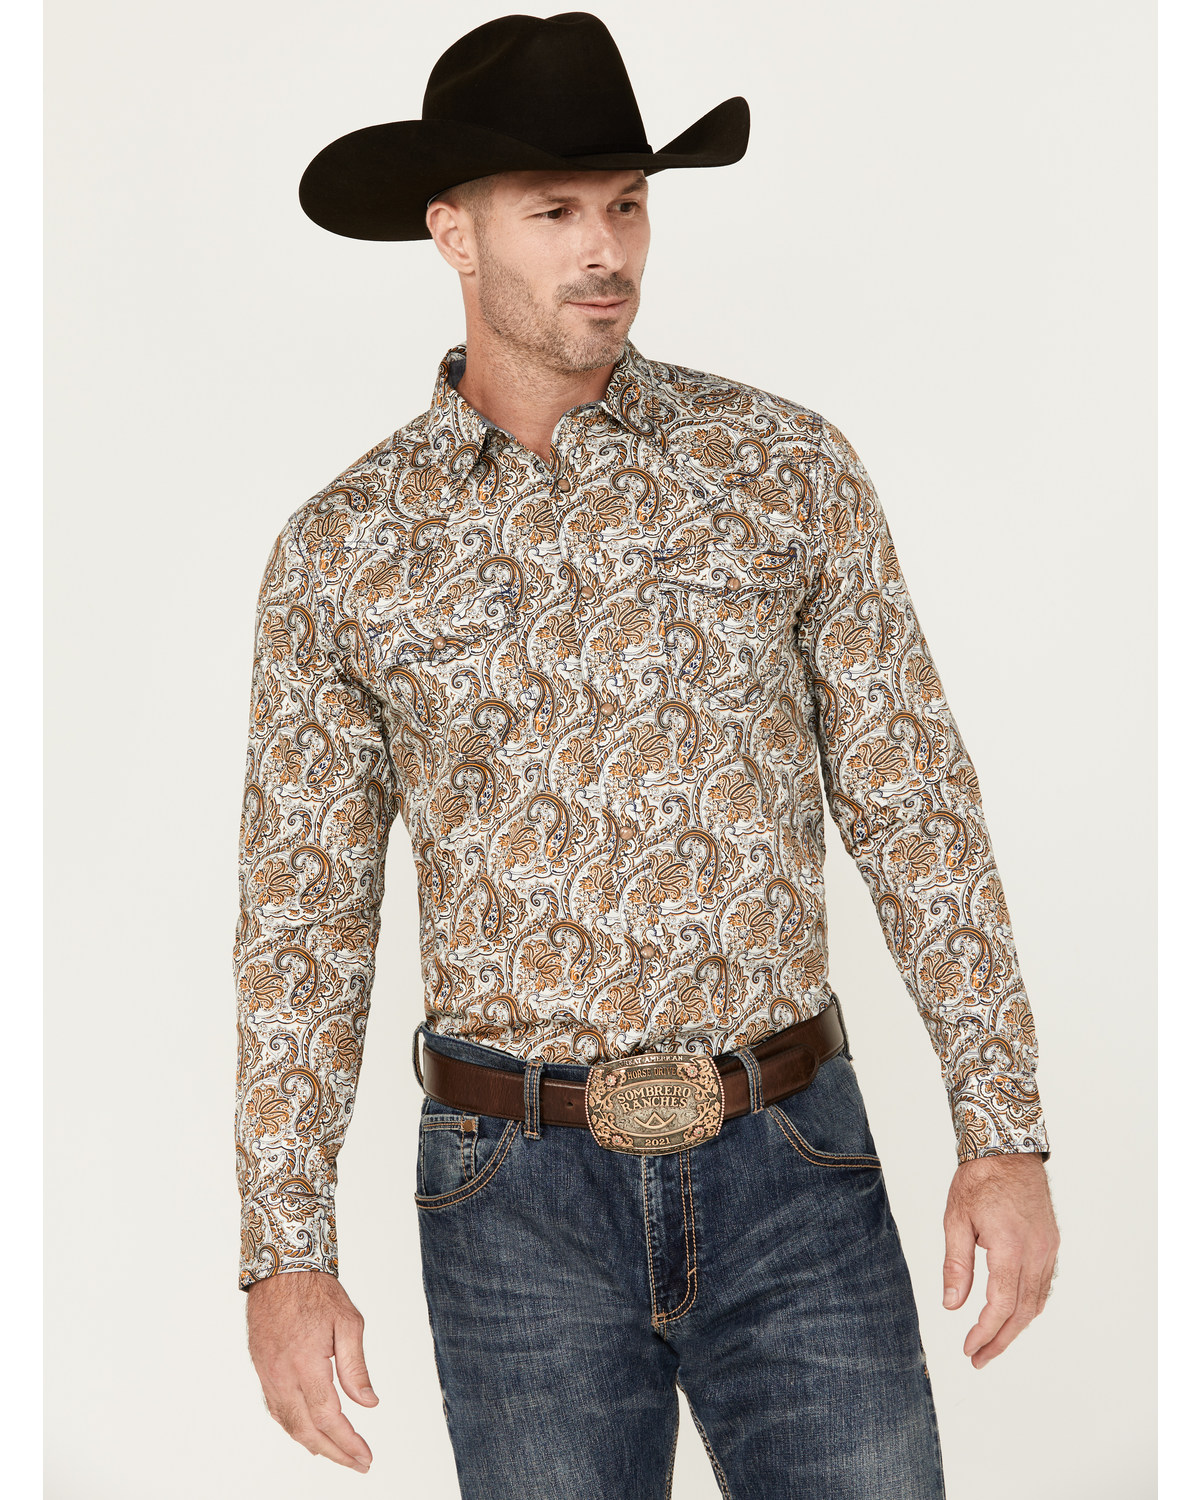 Cody James Men's Gold Dust Paisley Print Long Sleeve Pearl Snap Western Shirt - Tall